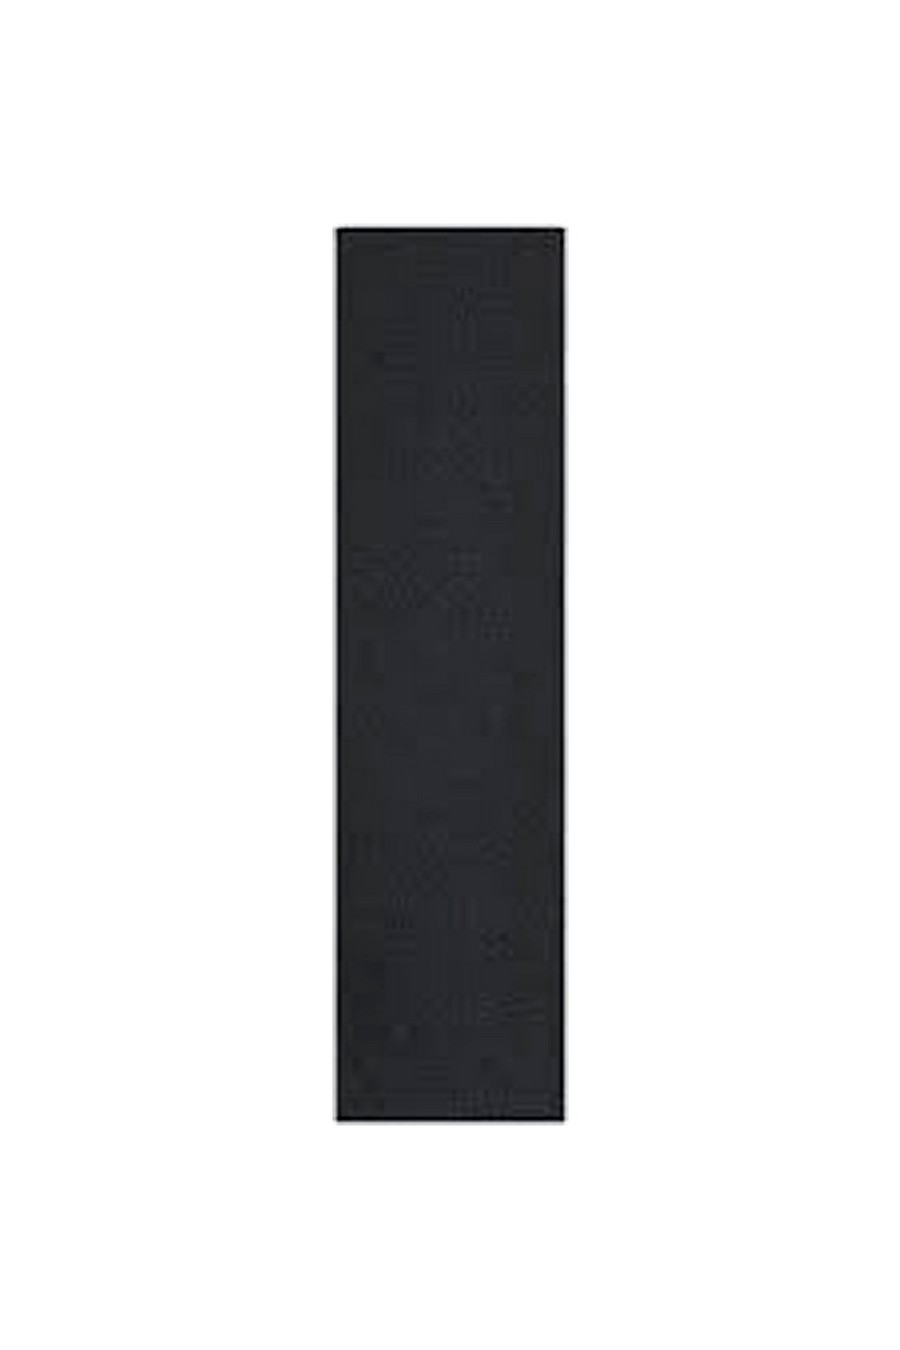 EMILLION Griptape SHEET 33 X 9 - BLACK-EMGT01-321-BLACK 44113